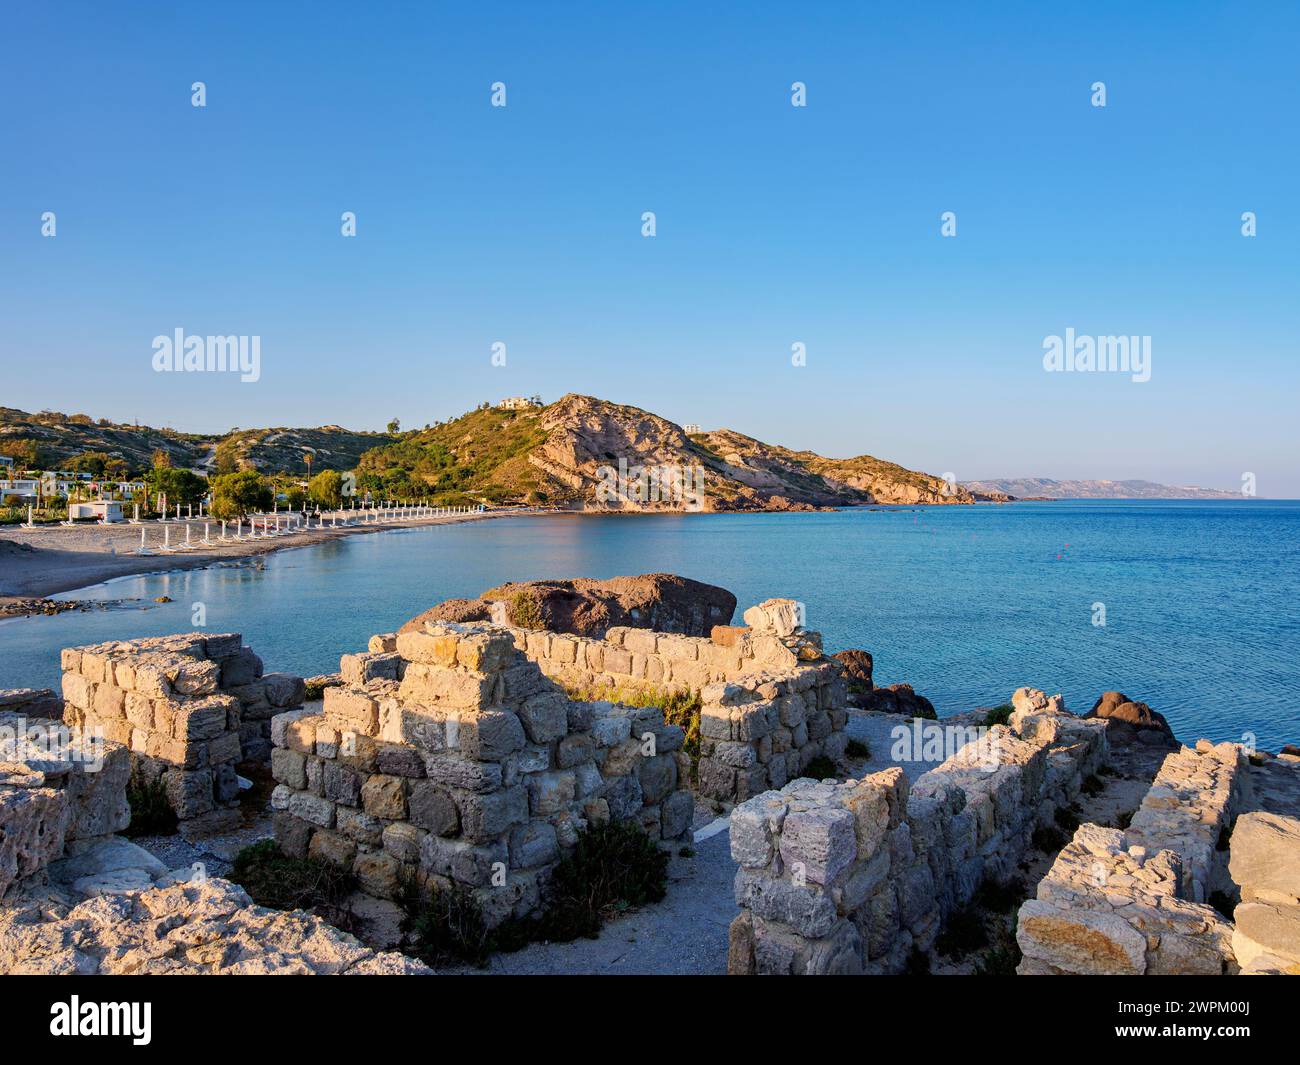 St. Stefanos Basilica Ruins at sunset, Agios Stefanos Beach, Kos Island, Dodecanese, Greek Islands, Greece, Europe Stock Photo